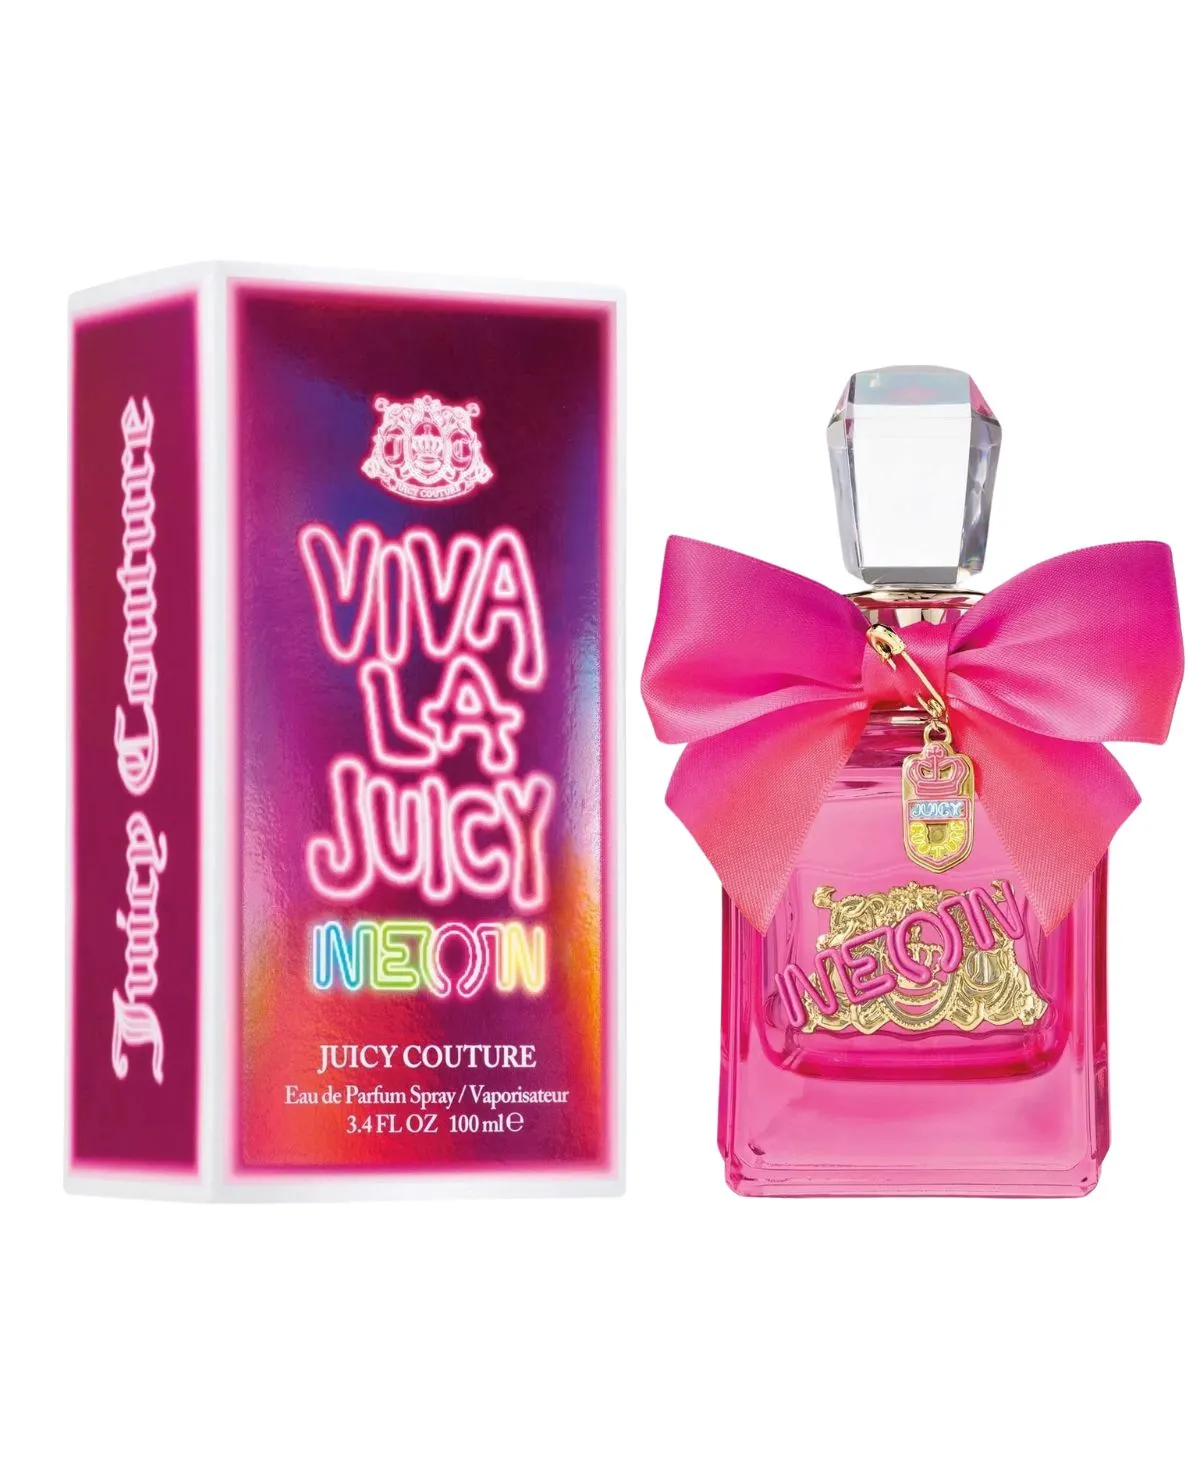 Juicy Couture Viva La Juicy Neon for Women Eau de Parfum (EDP) Spray 3.4 oz (100 ml) 719346257091